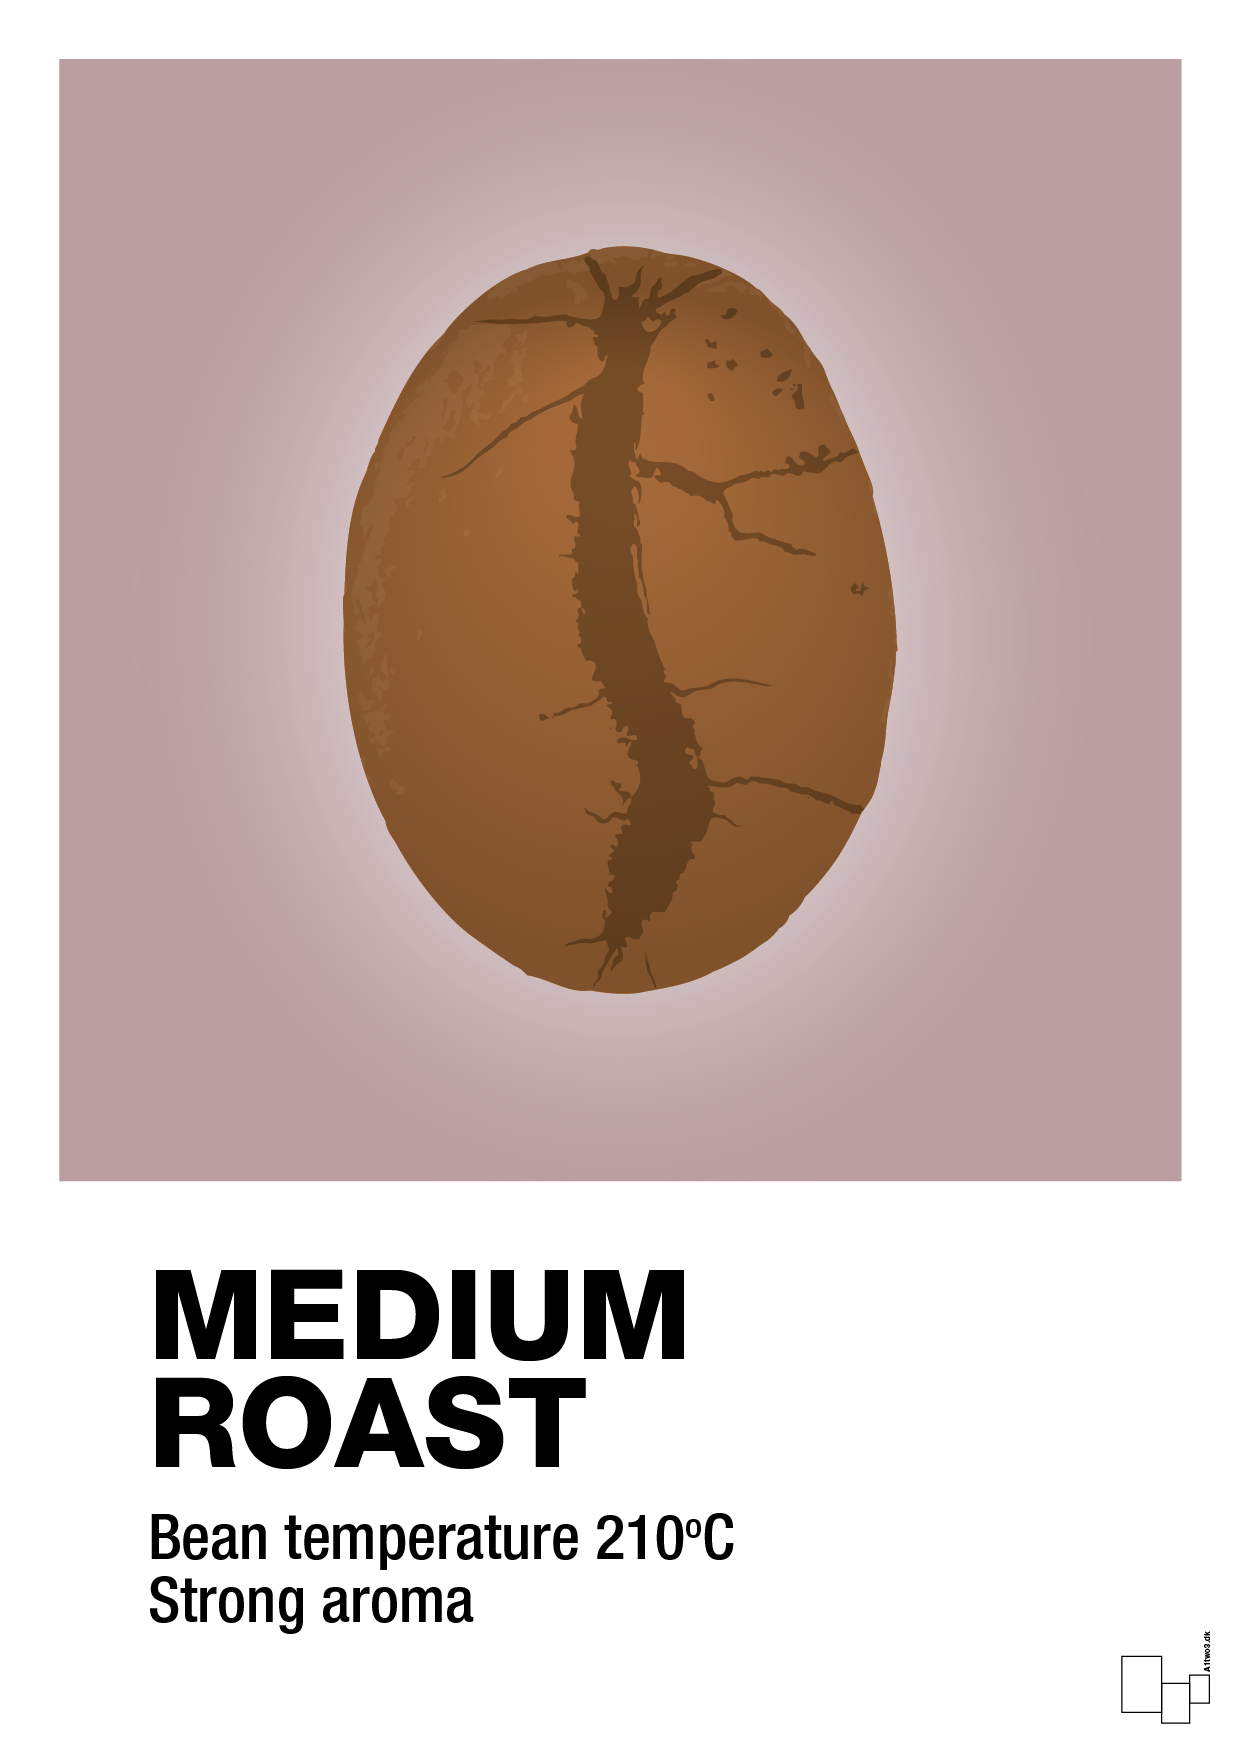 medium roast - Plakat med Mad & Drikke i Light Rose